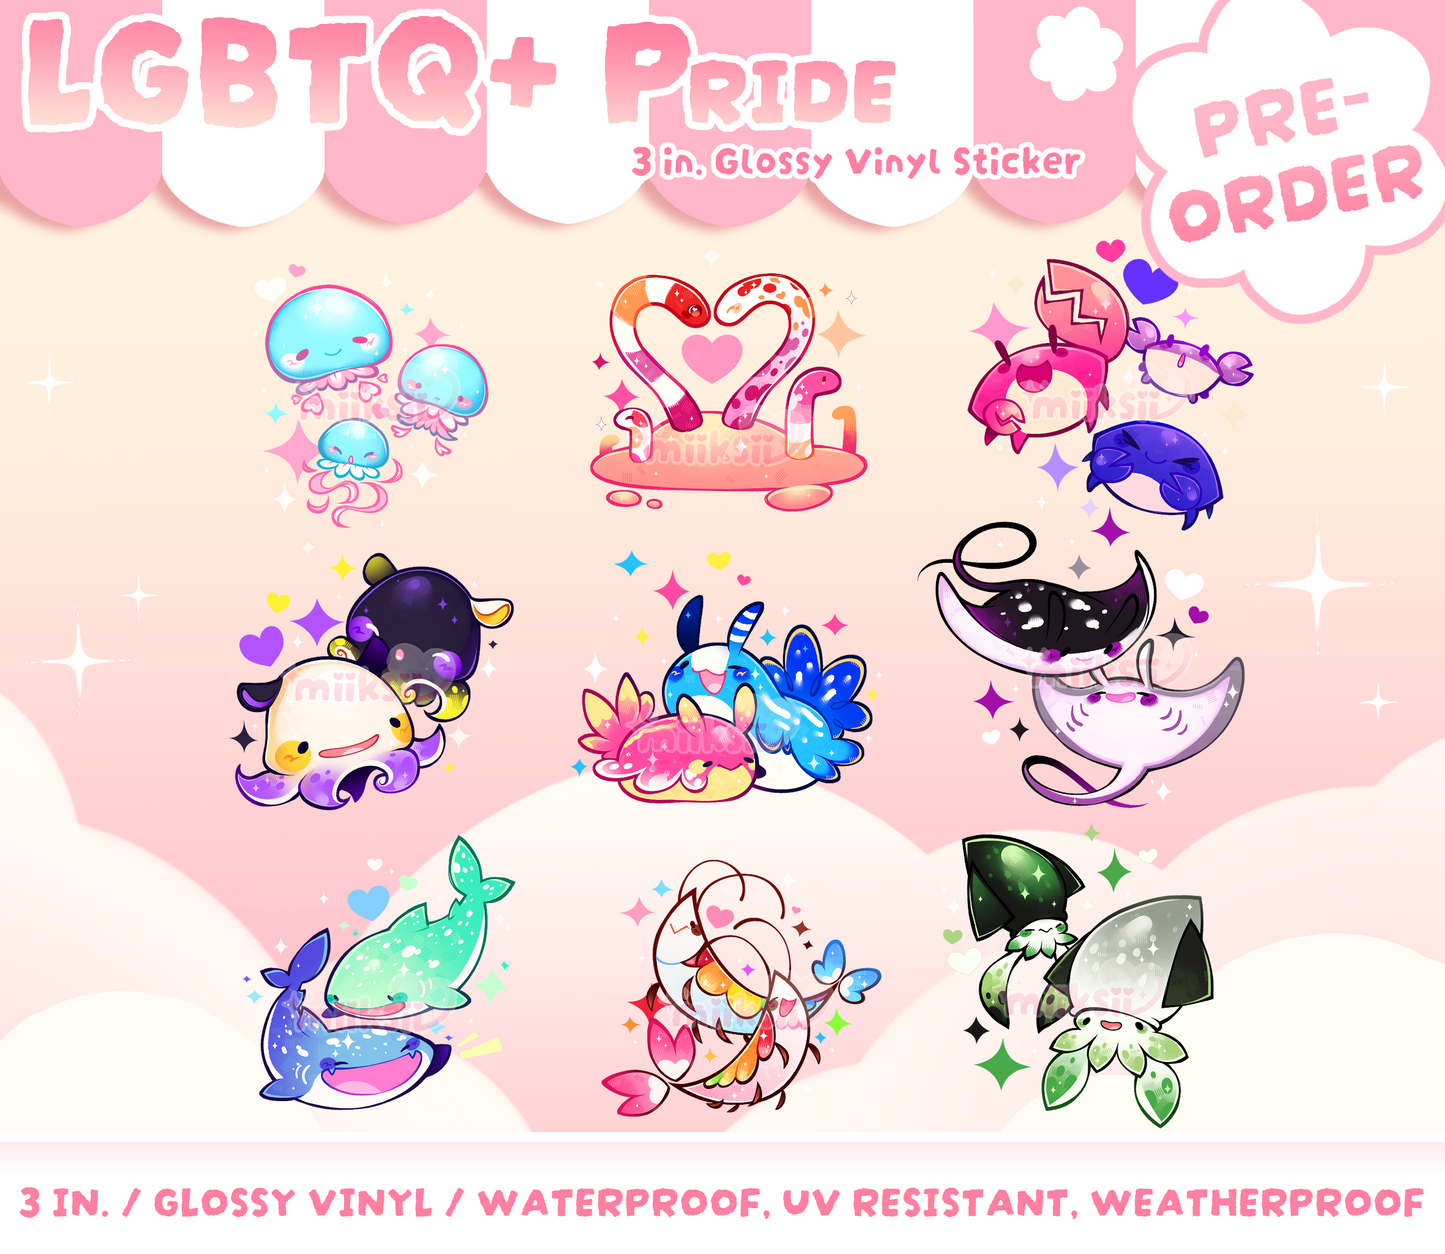 PREORDER ♡ LGBTQ+ Pride Stickers